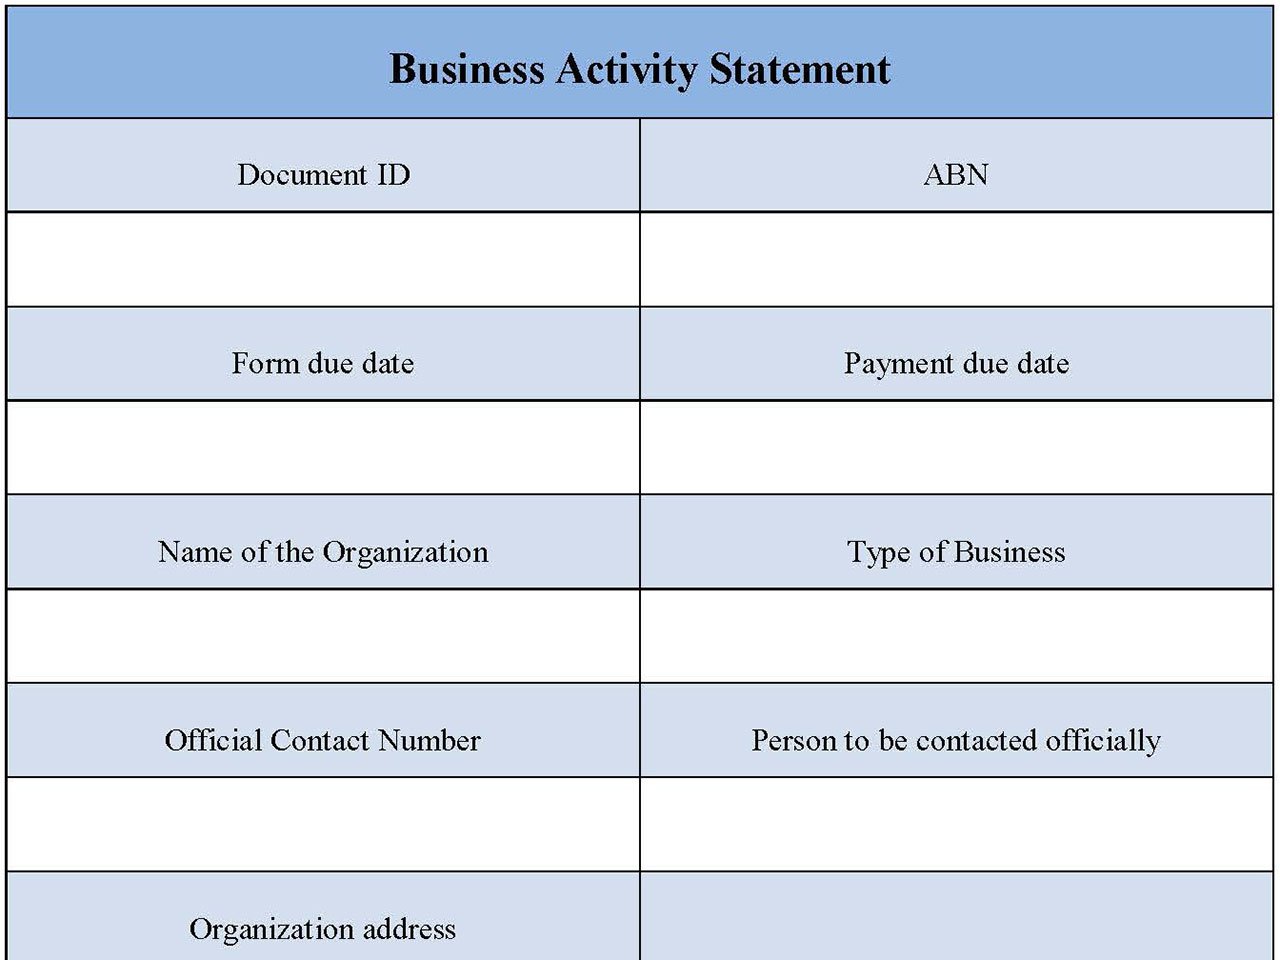 Business activity statement form